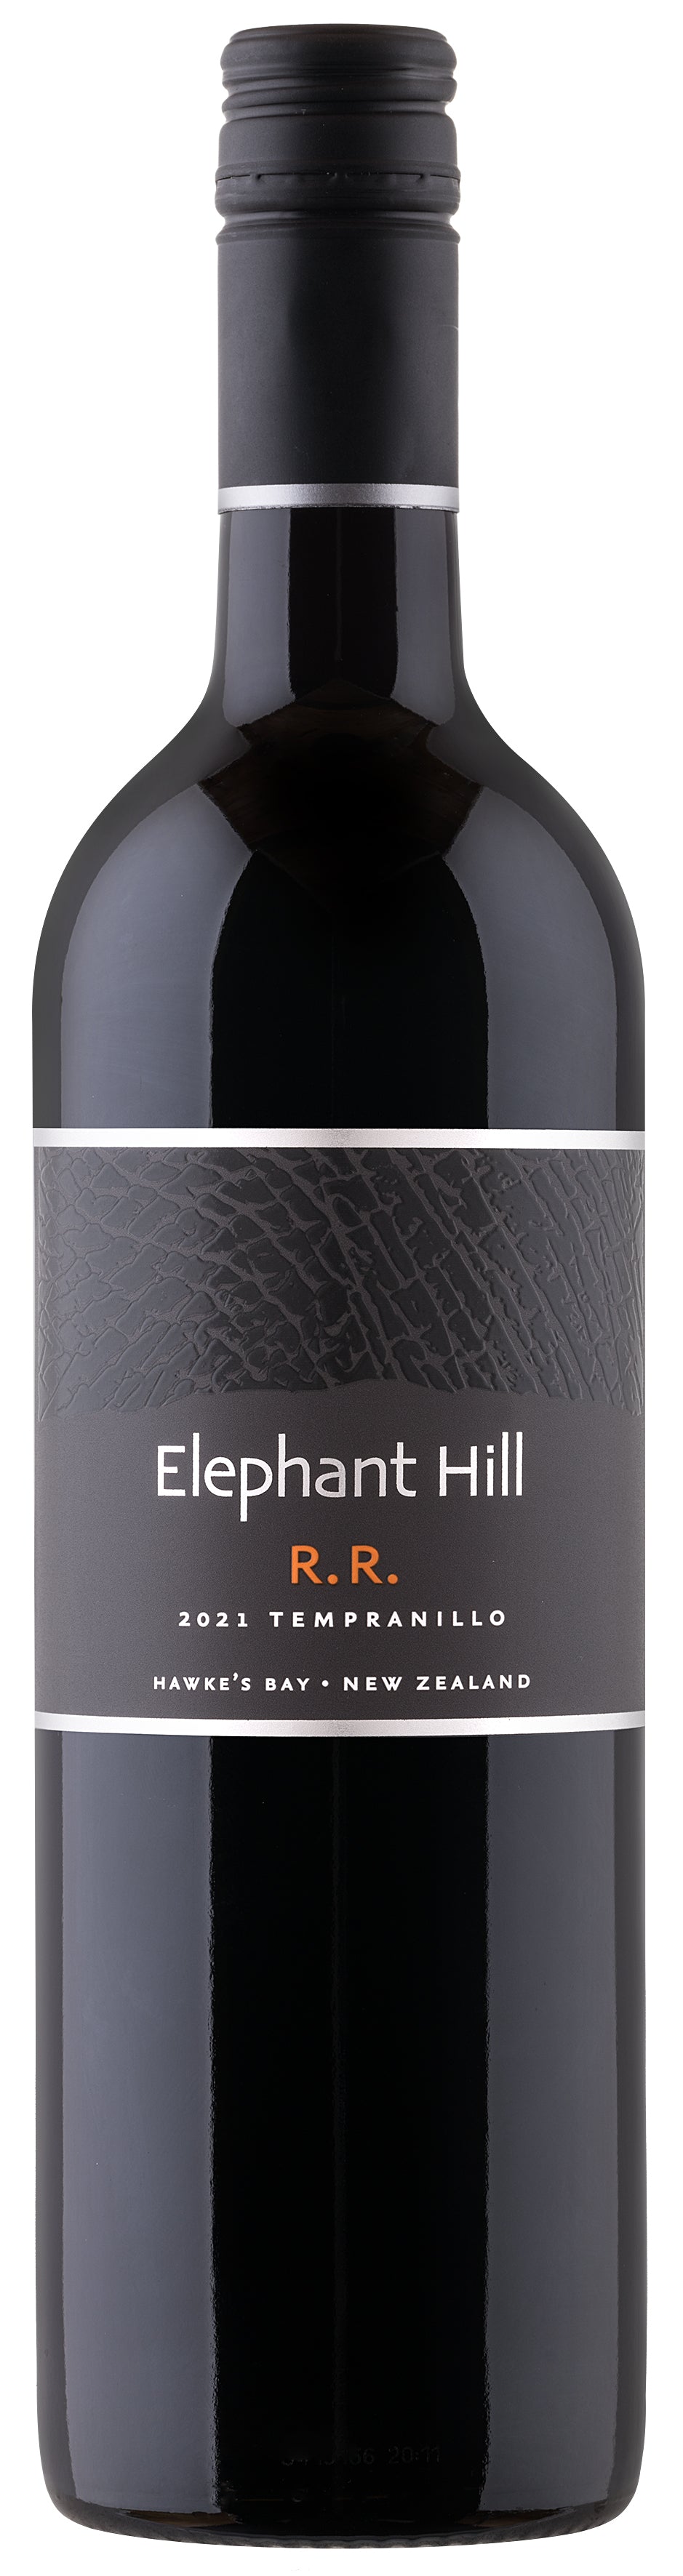 2021 Elephant Hill R.R. Tempranillo